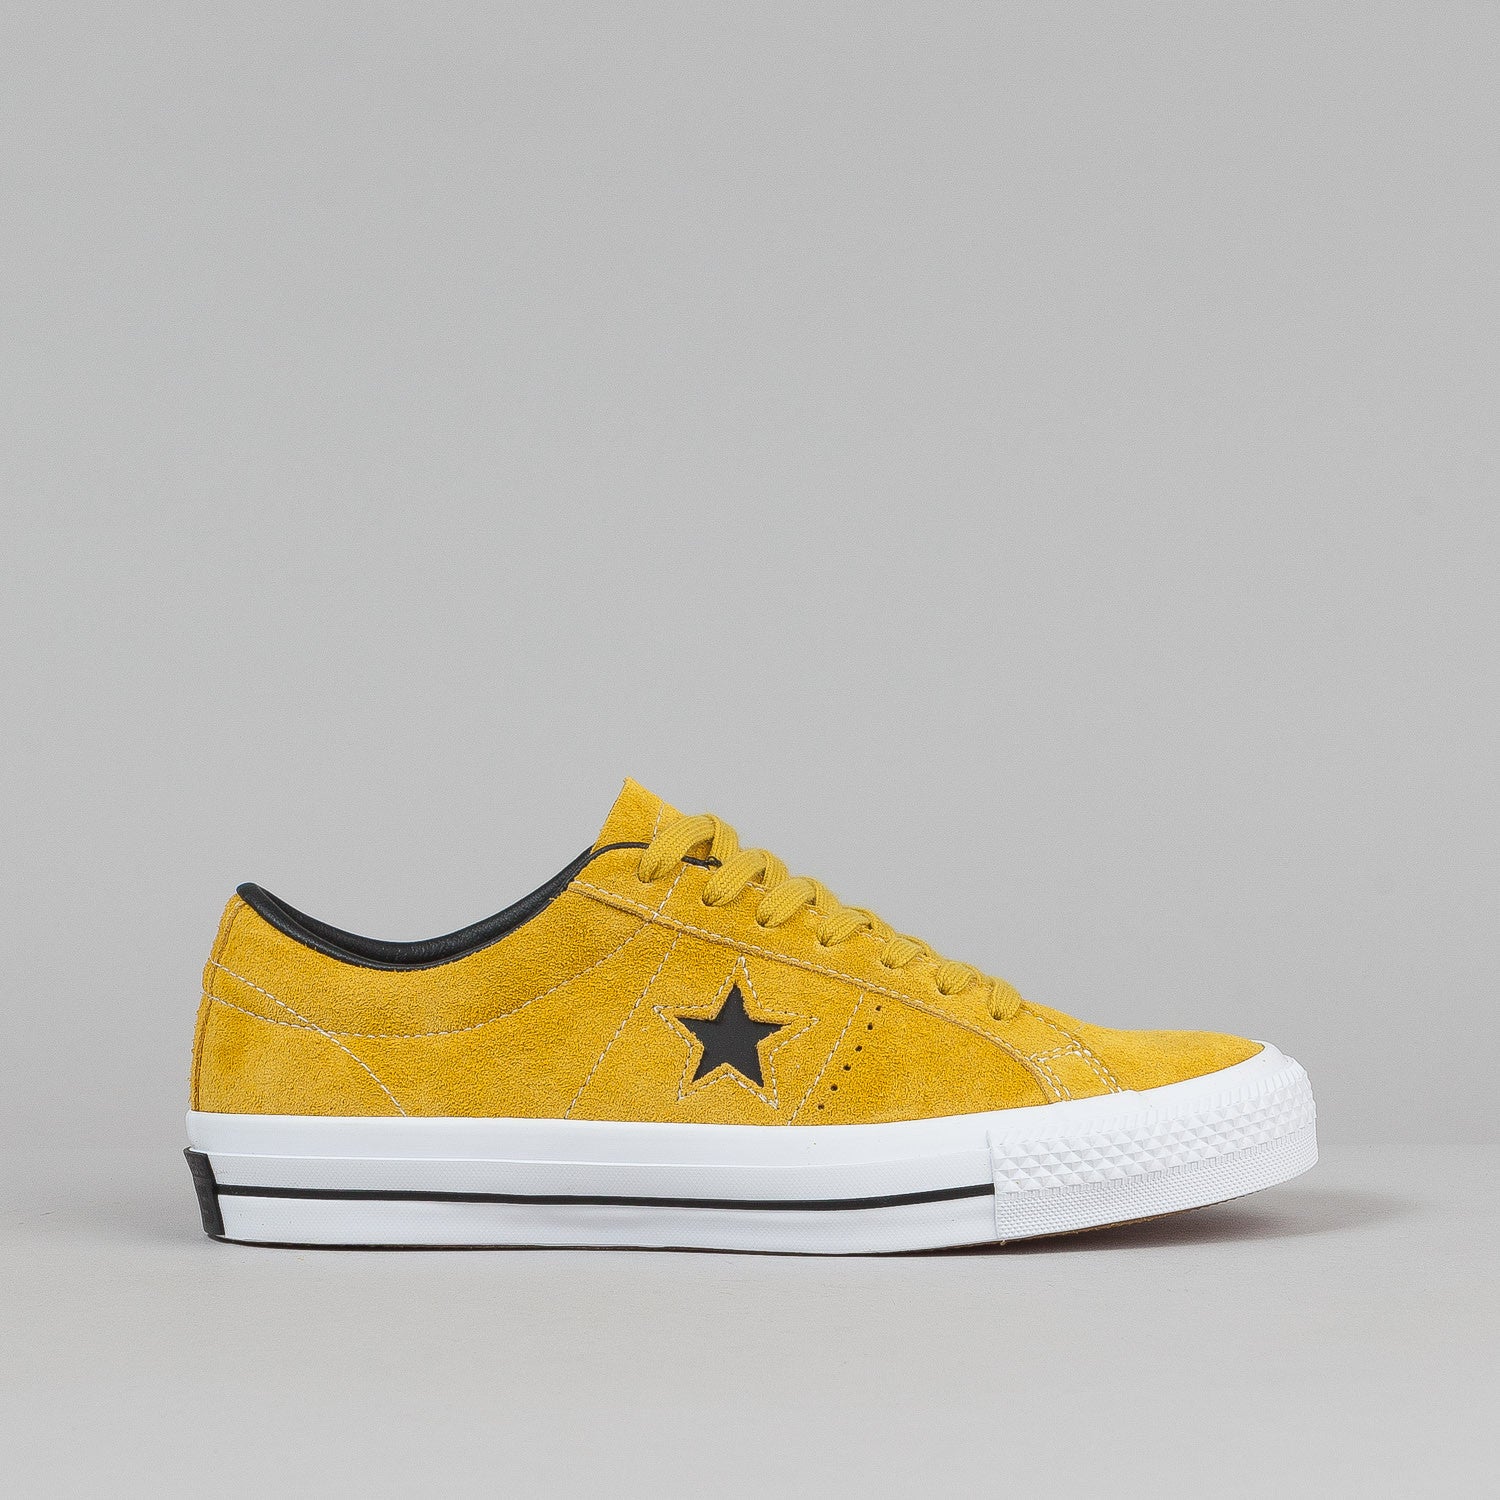 converse one star yellow black